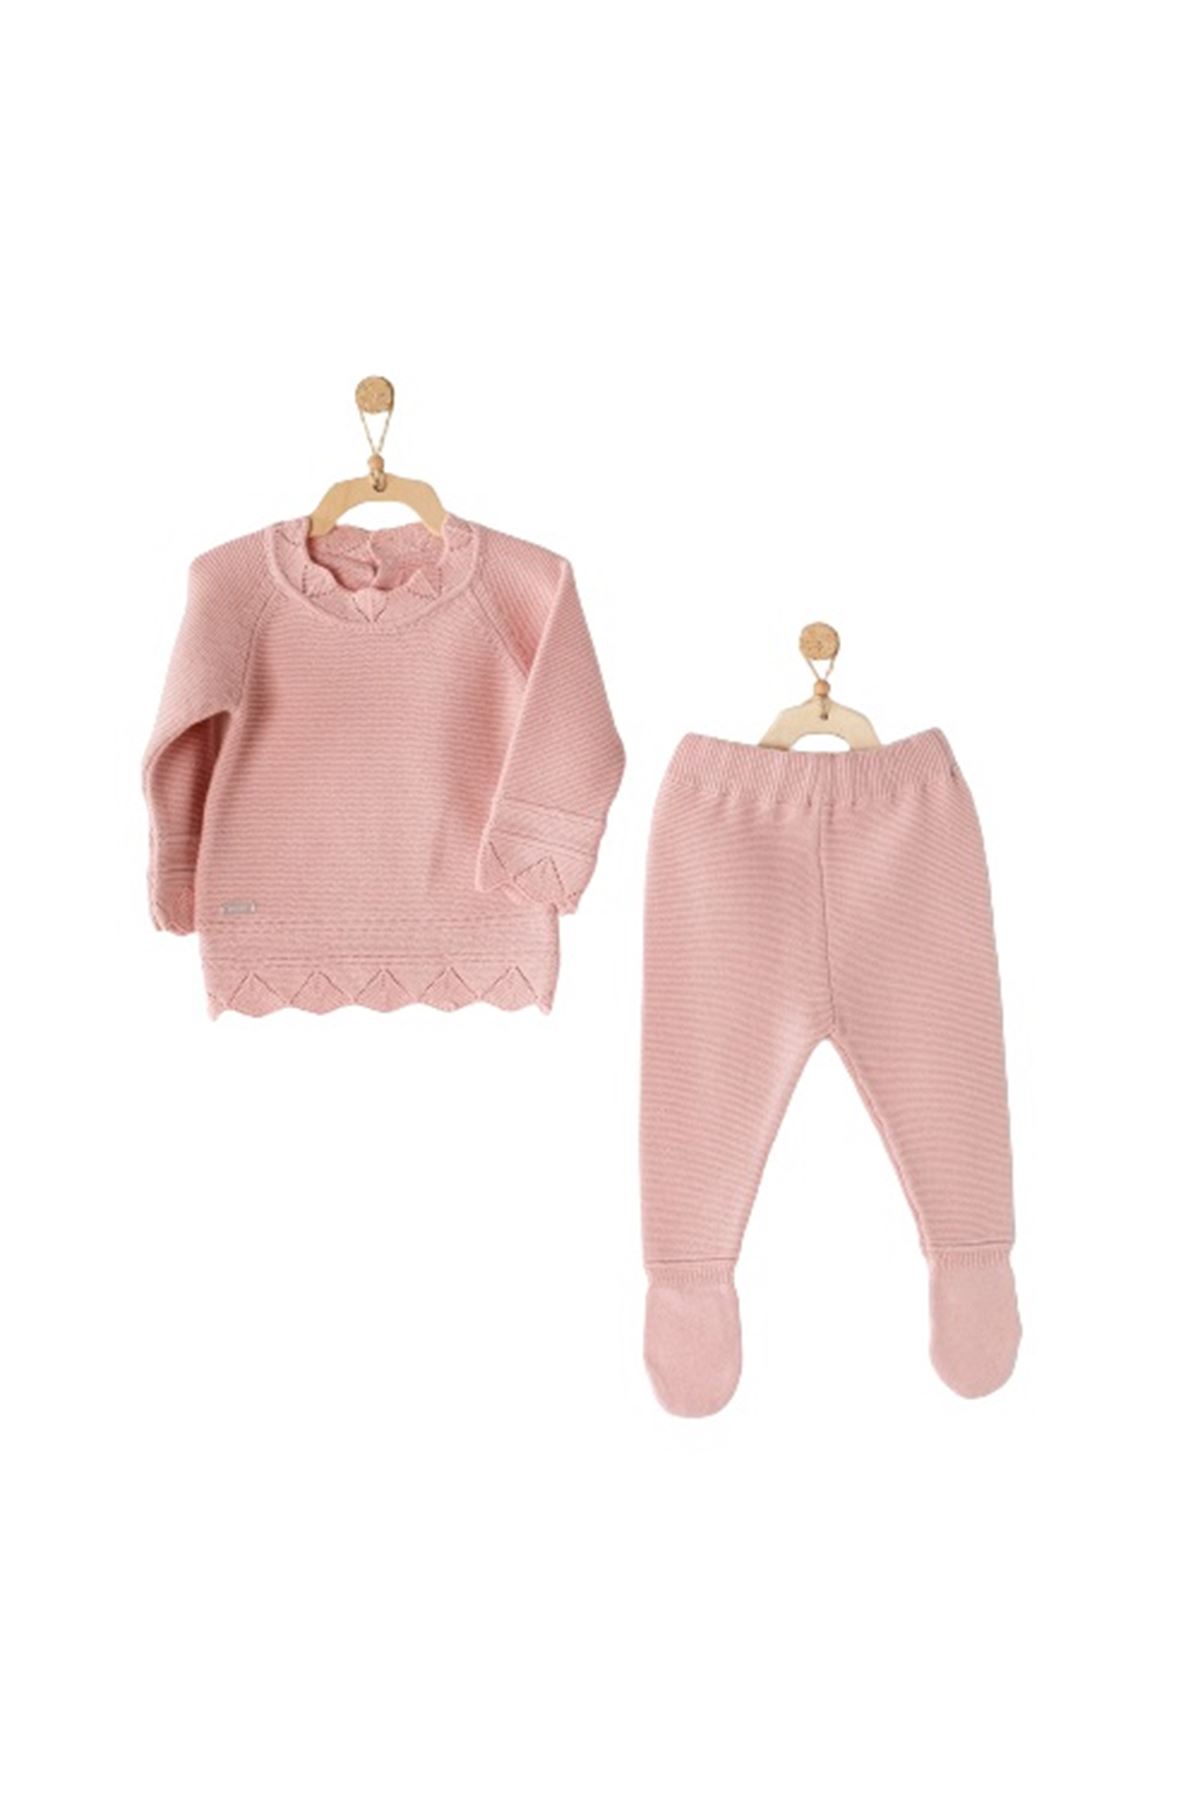 Andywawa AC23201 Knitwear 2Li Bebek Triko Takım Pink